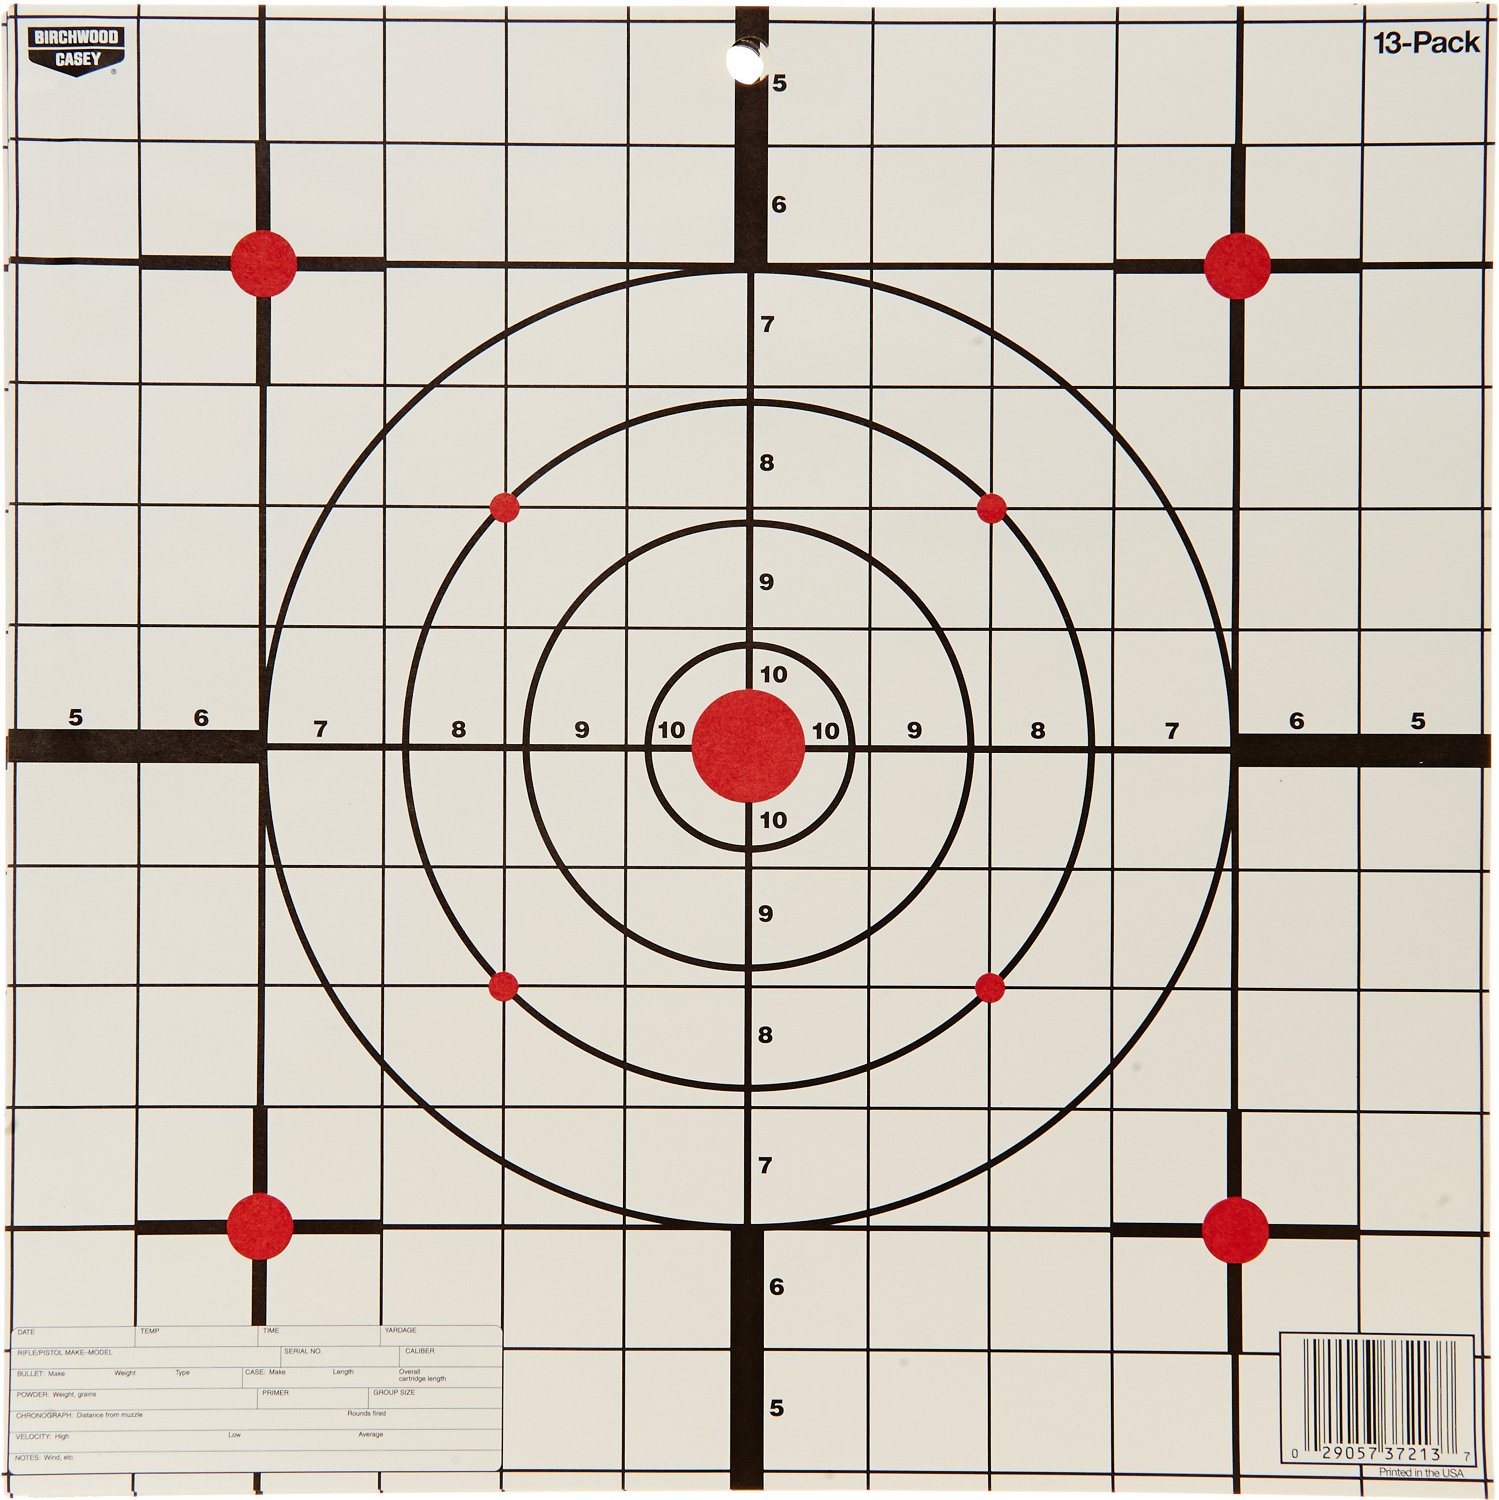  Splatterburst Targets - 10 inch Stick & Splatter Reactive Self  Adhesive Shooting Targets - Gun - Rifle - Pistol - Airsoft - BB Gun -  Pellet Gun - Air Rifle (100 Pack) : Sports & Outdoors